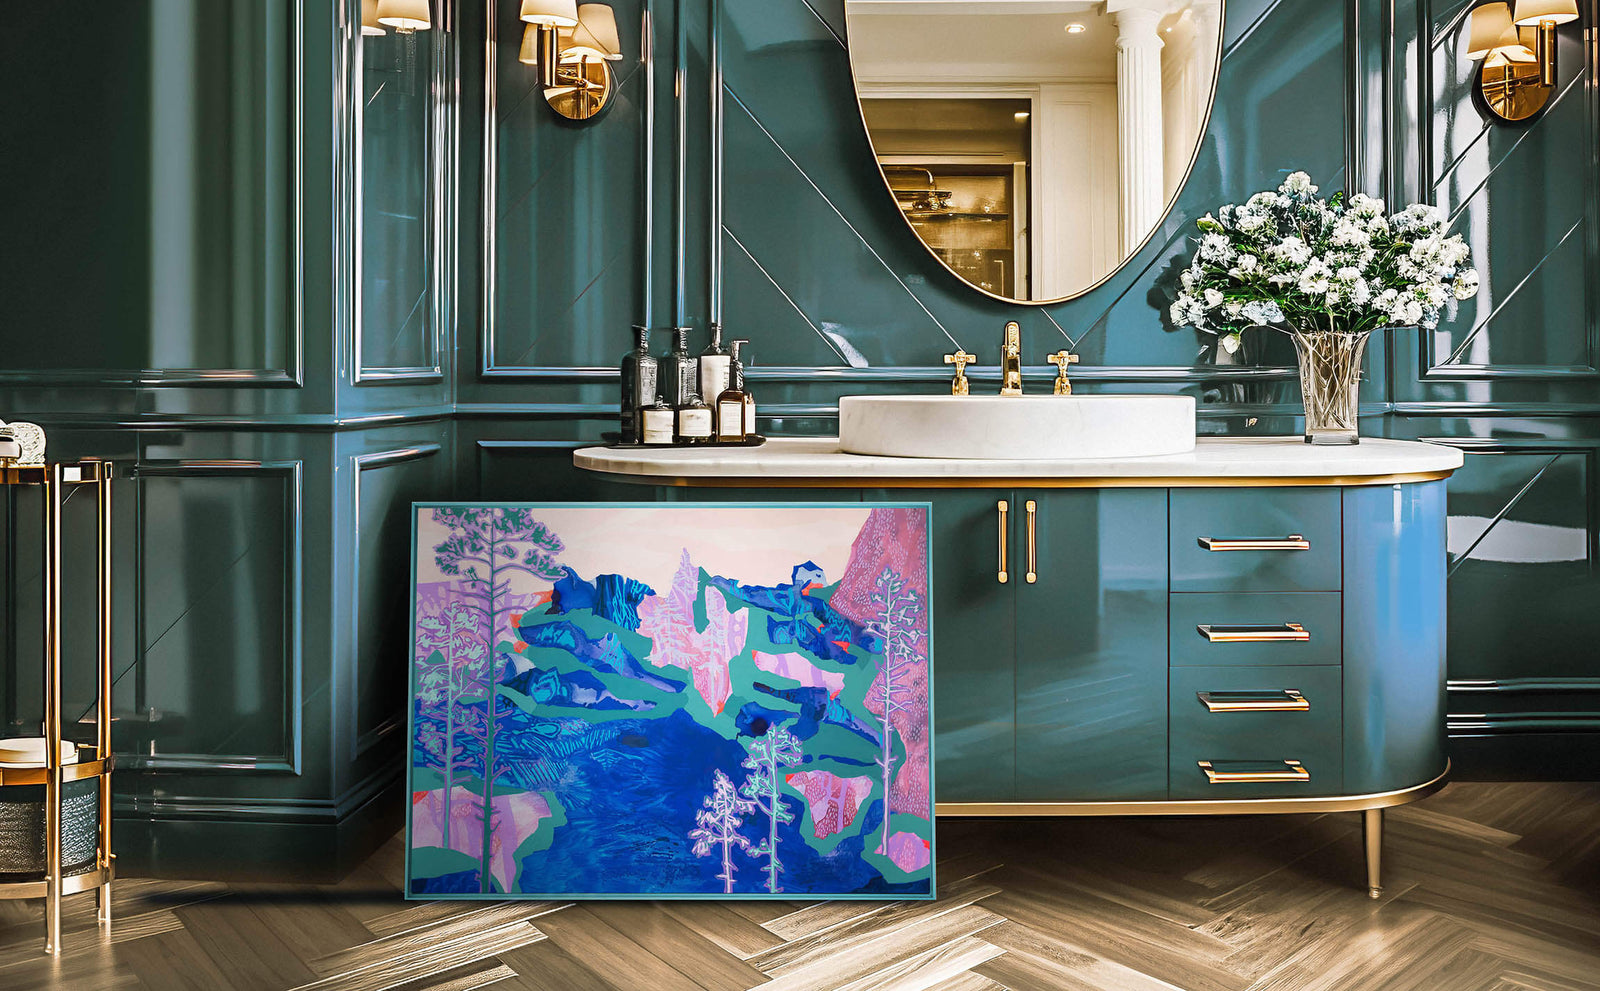 Hague blue bathroom with abstract modern art